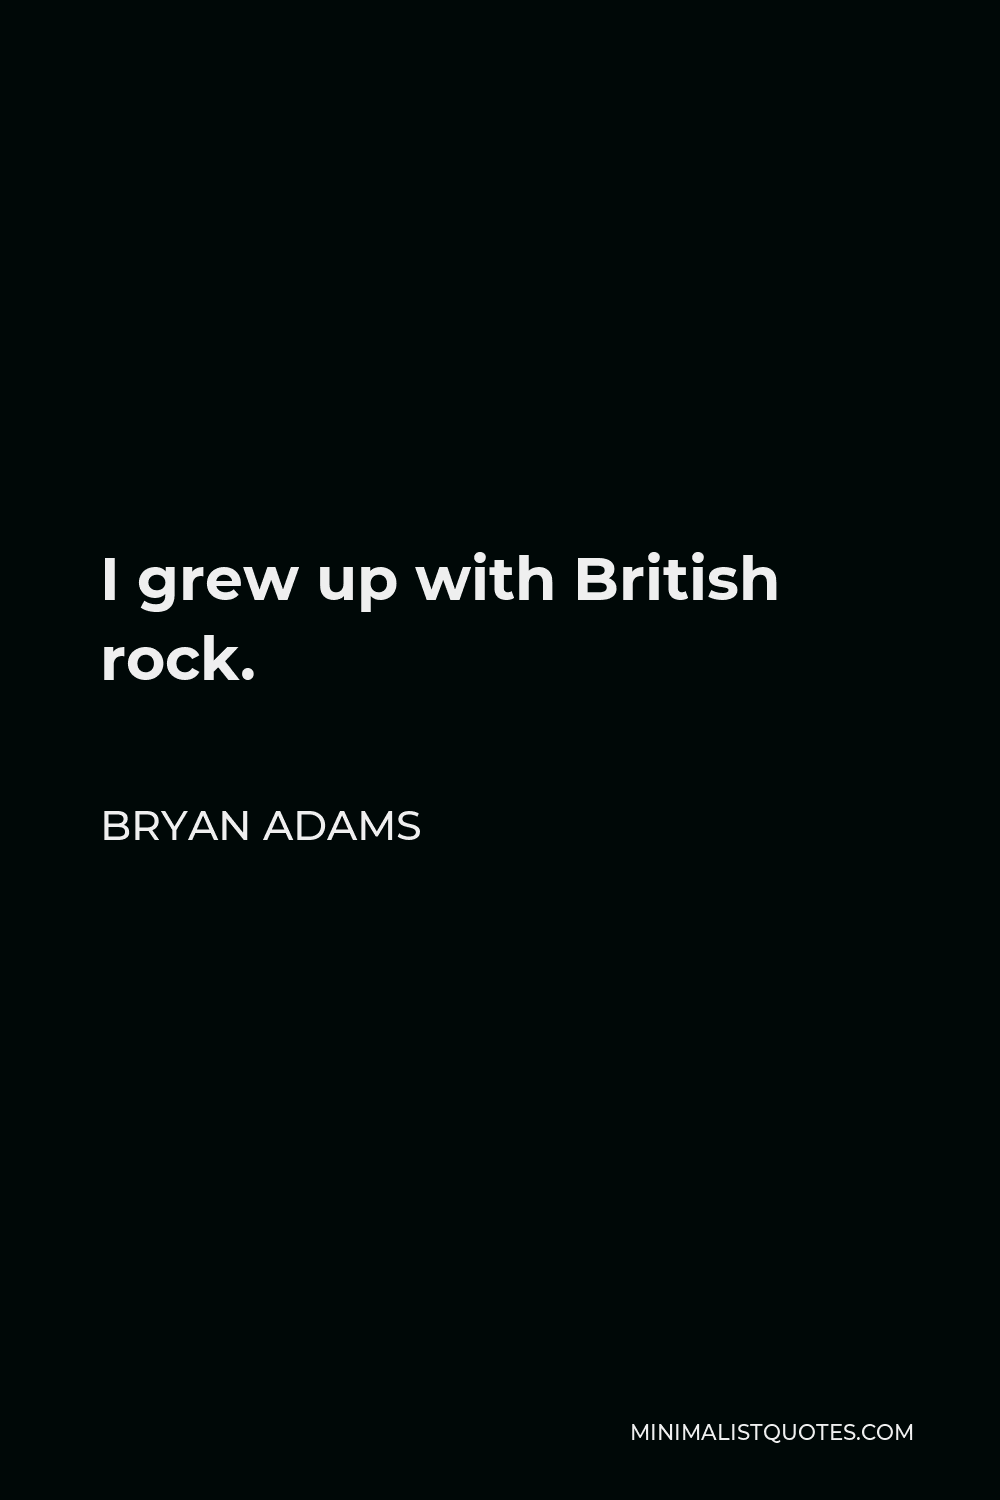 Bryan Adams Quote - I grew up with British rock.